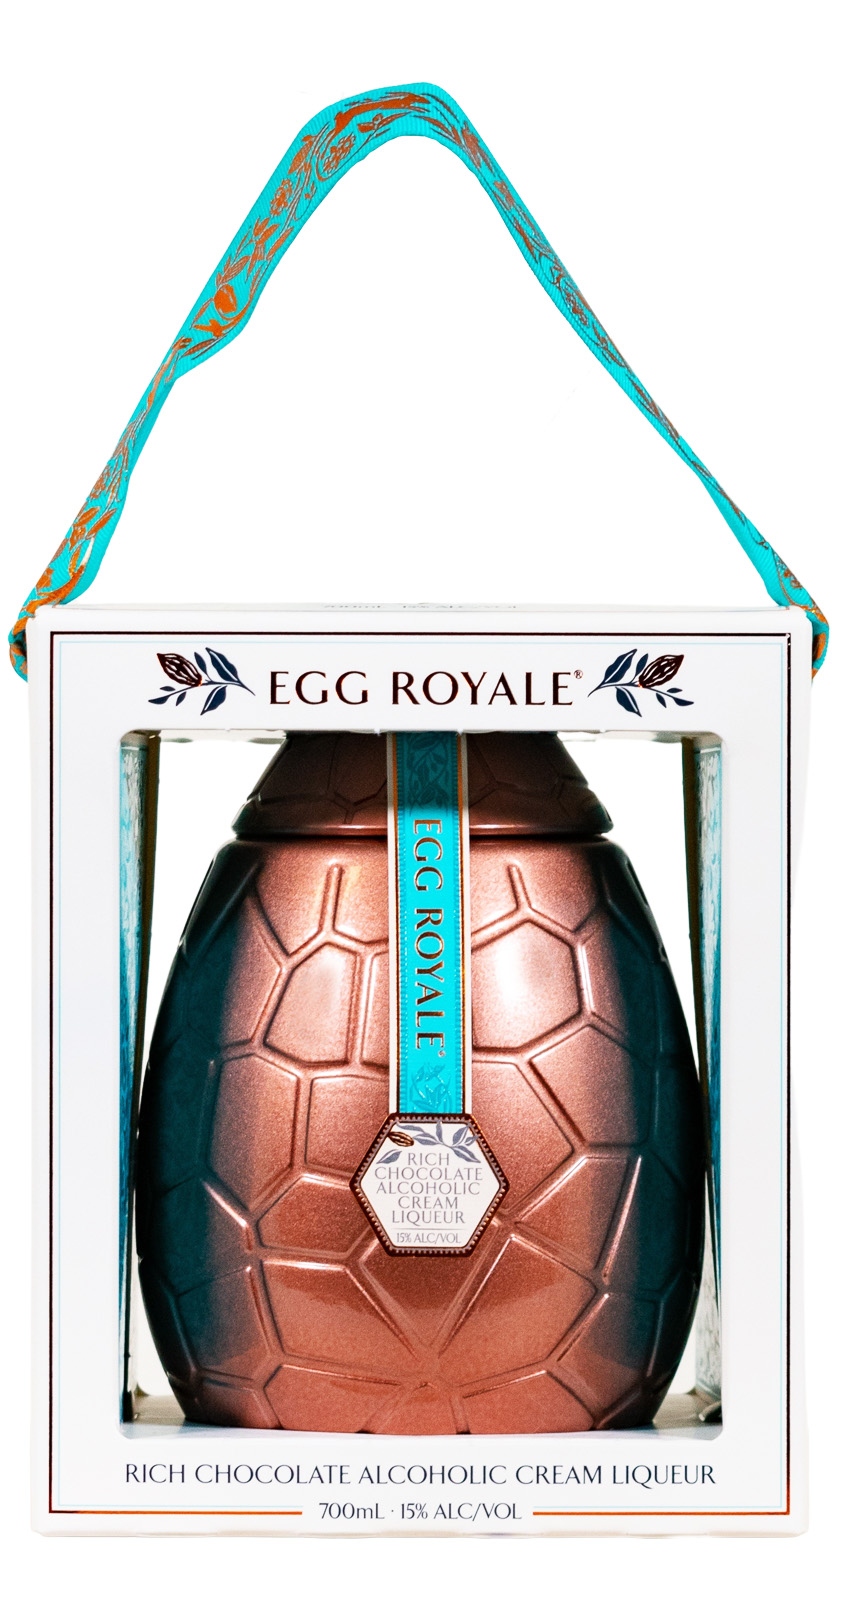 Egg Royale Schokoladen kaufen günstig